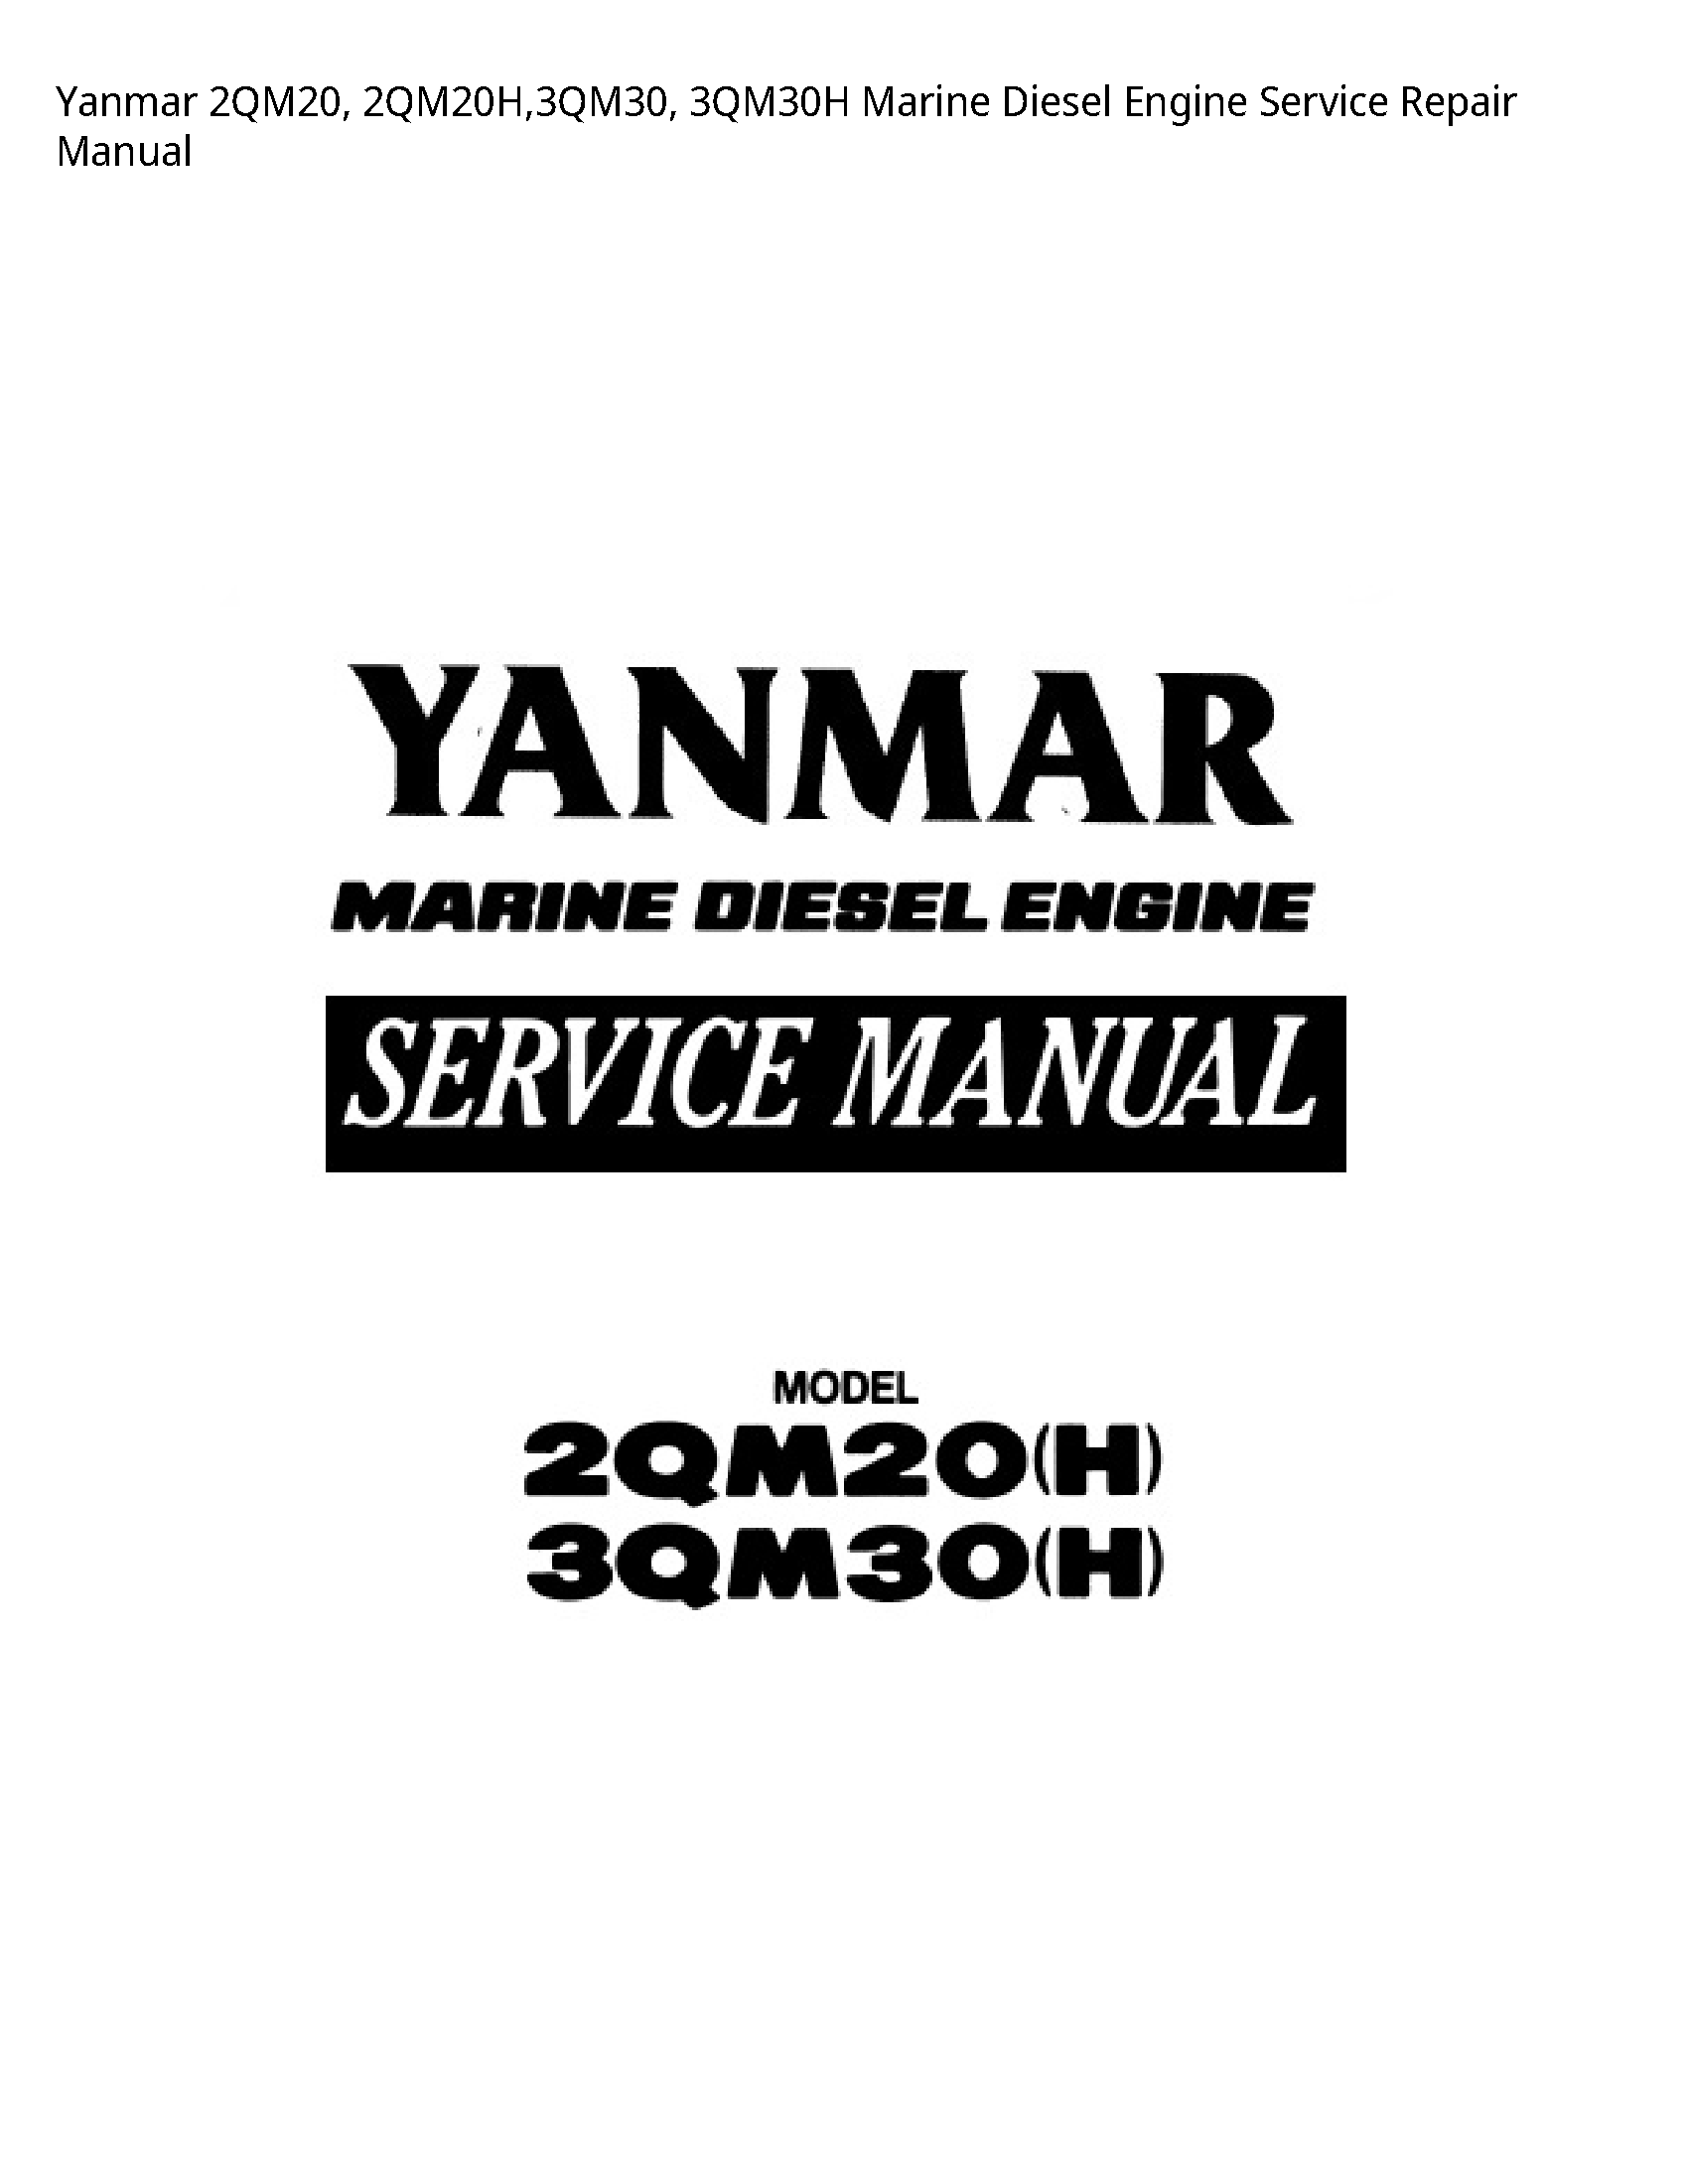 Yanmar 2QM20 Marine Diesel Engine manual